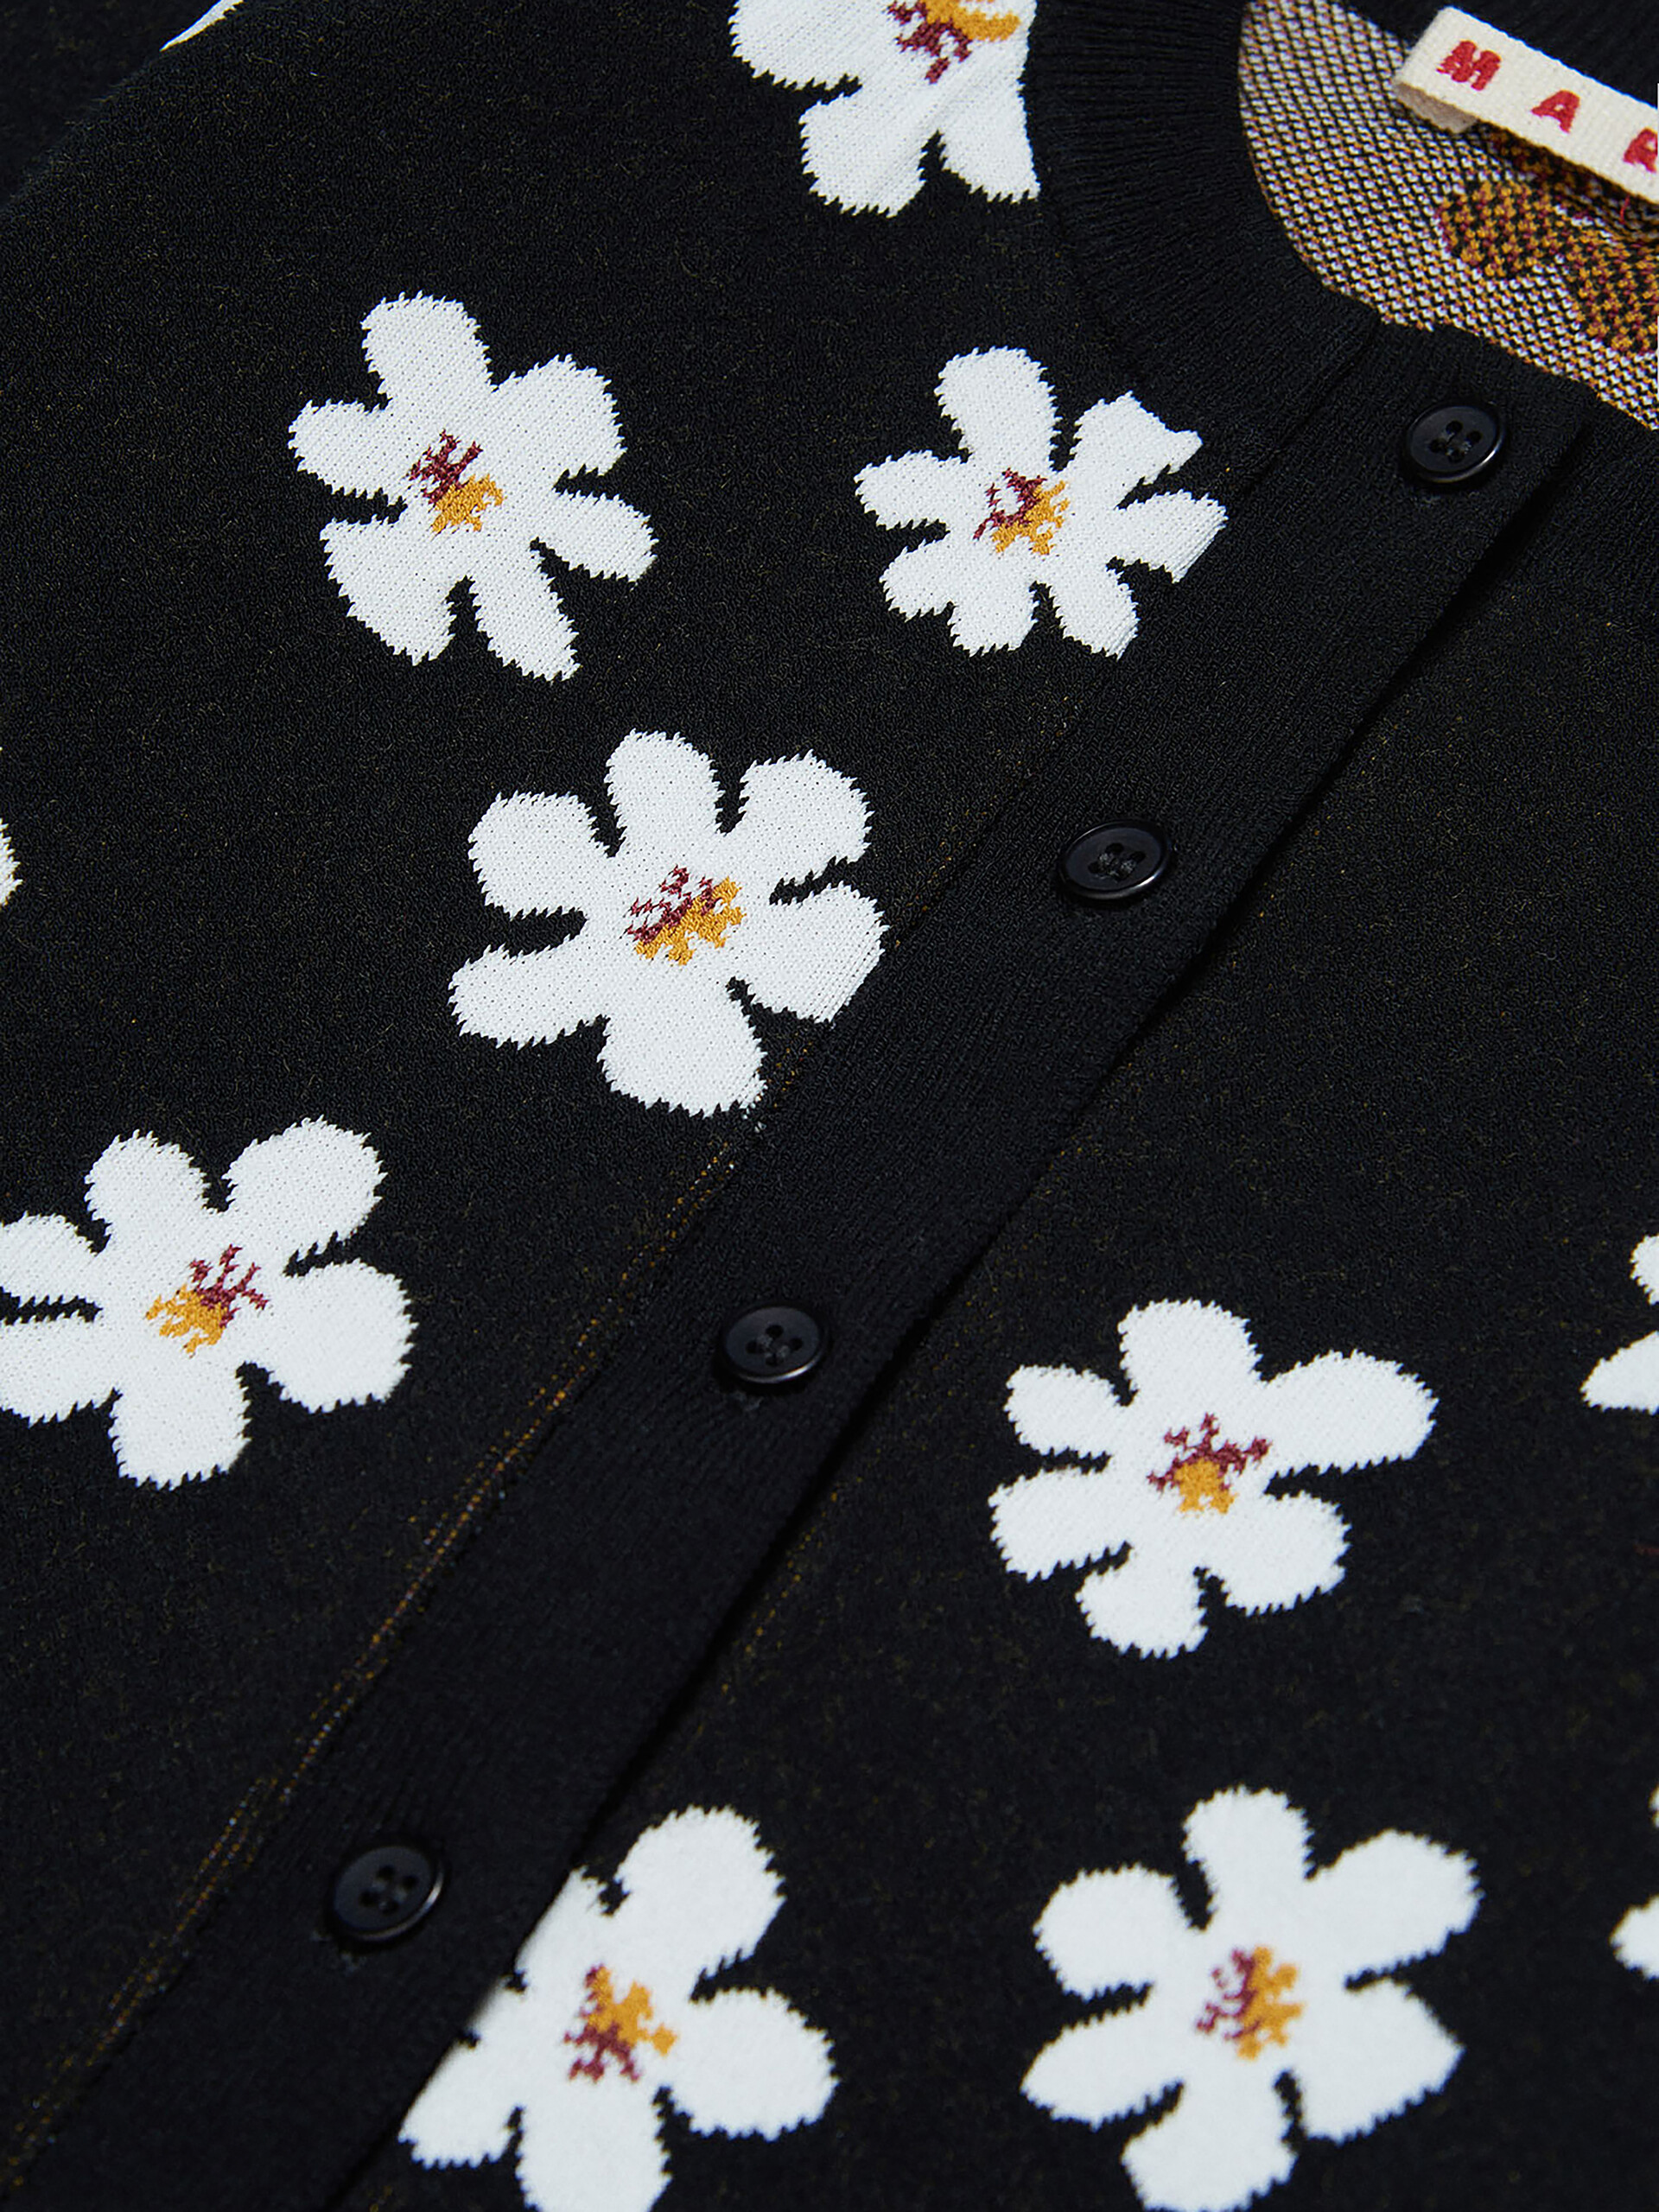 Black cardigan with jacquard Daisy motif - Knitwear - Image 3